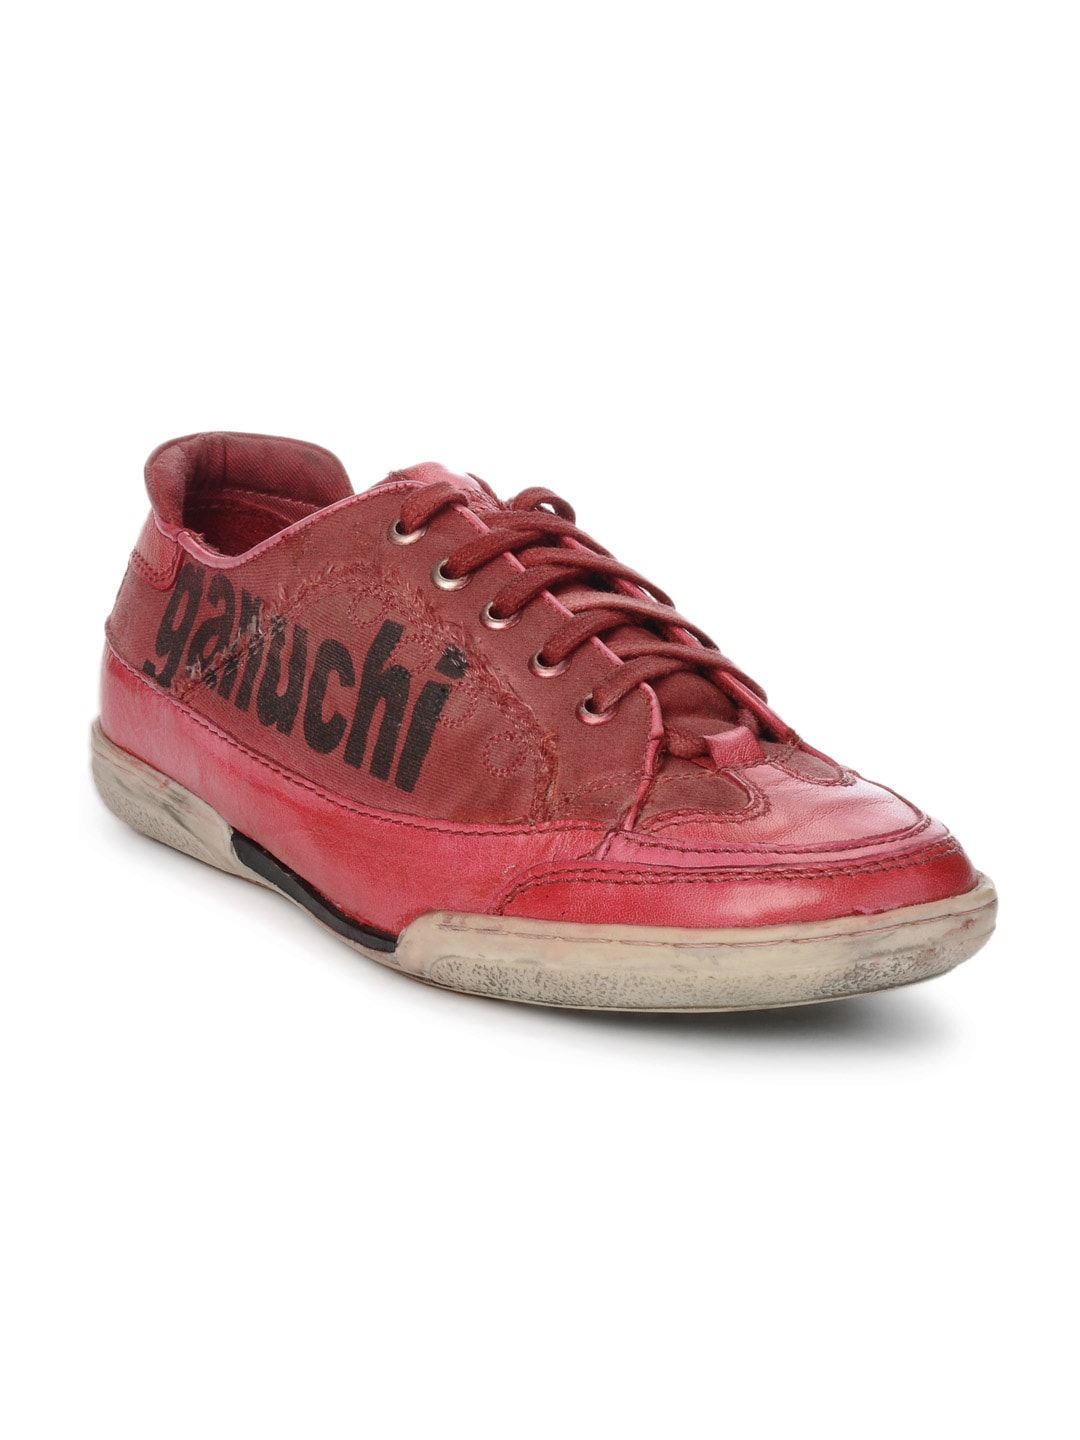 Ganuchi Men Red Casual Shoes